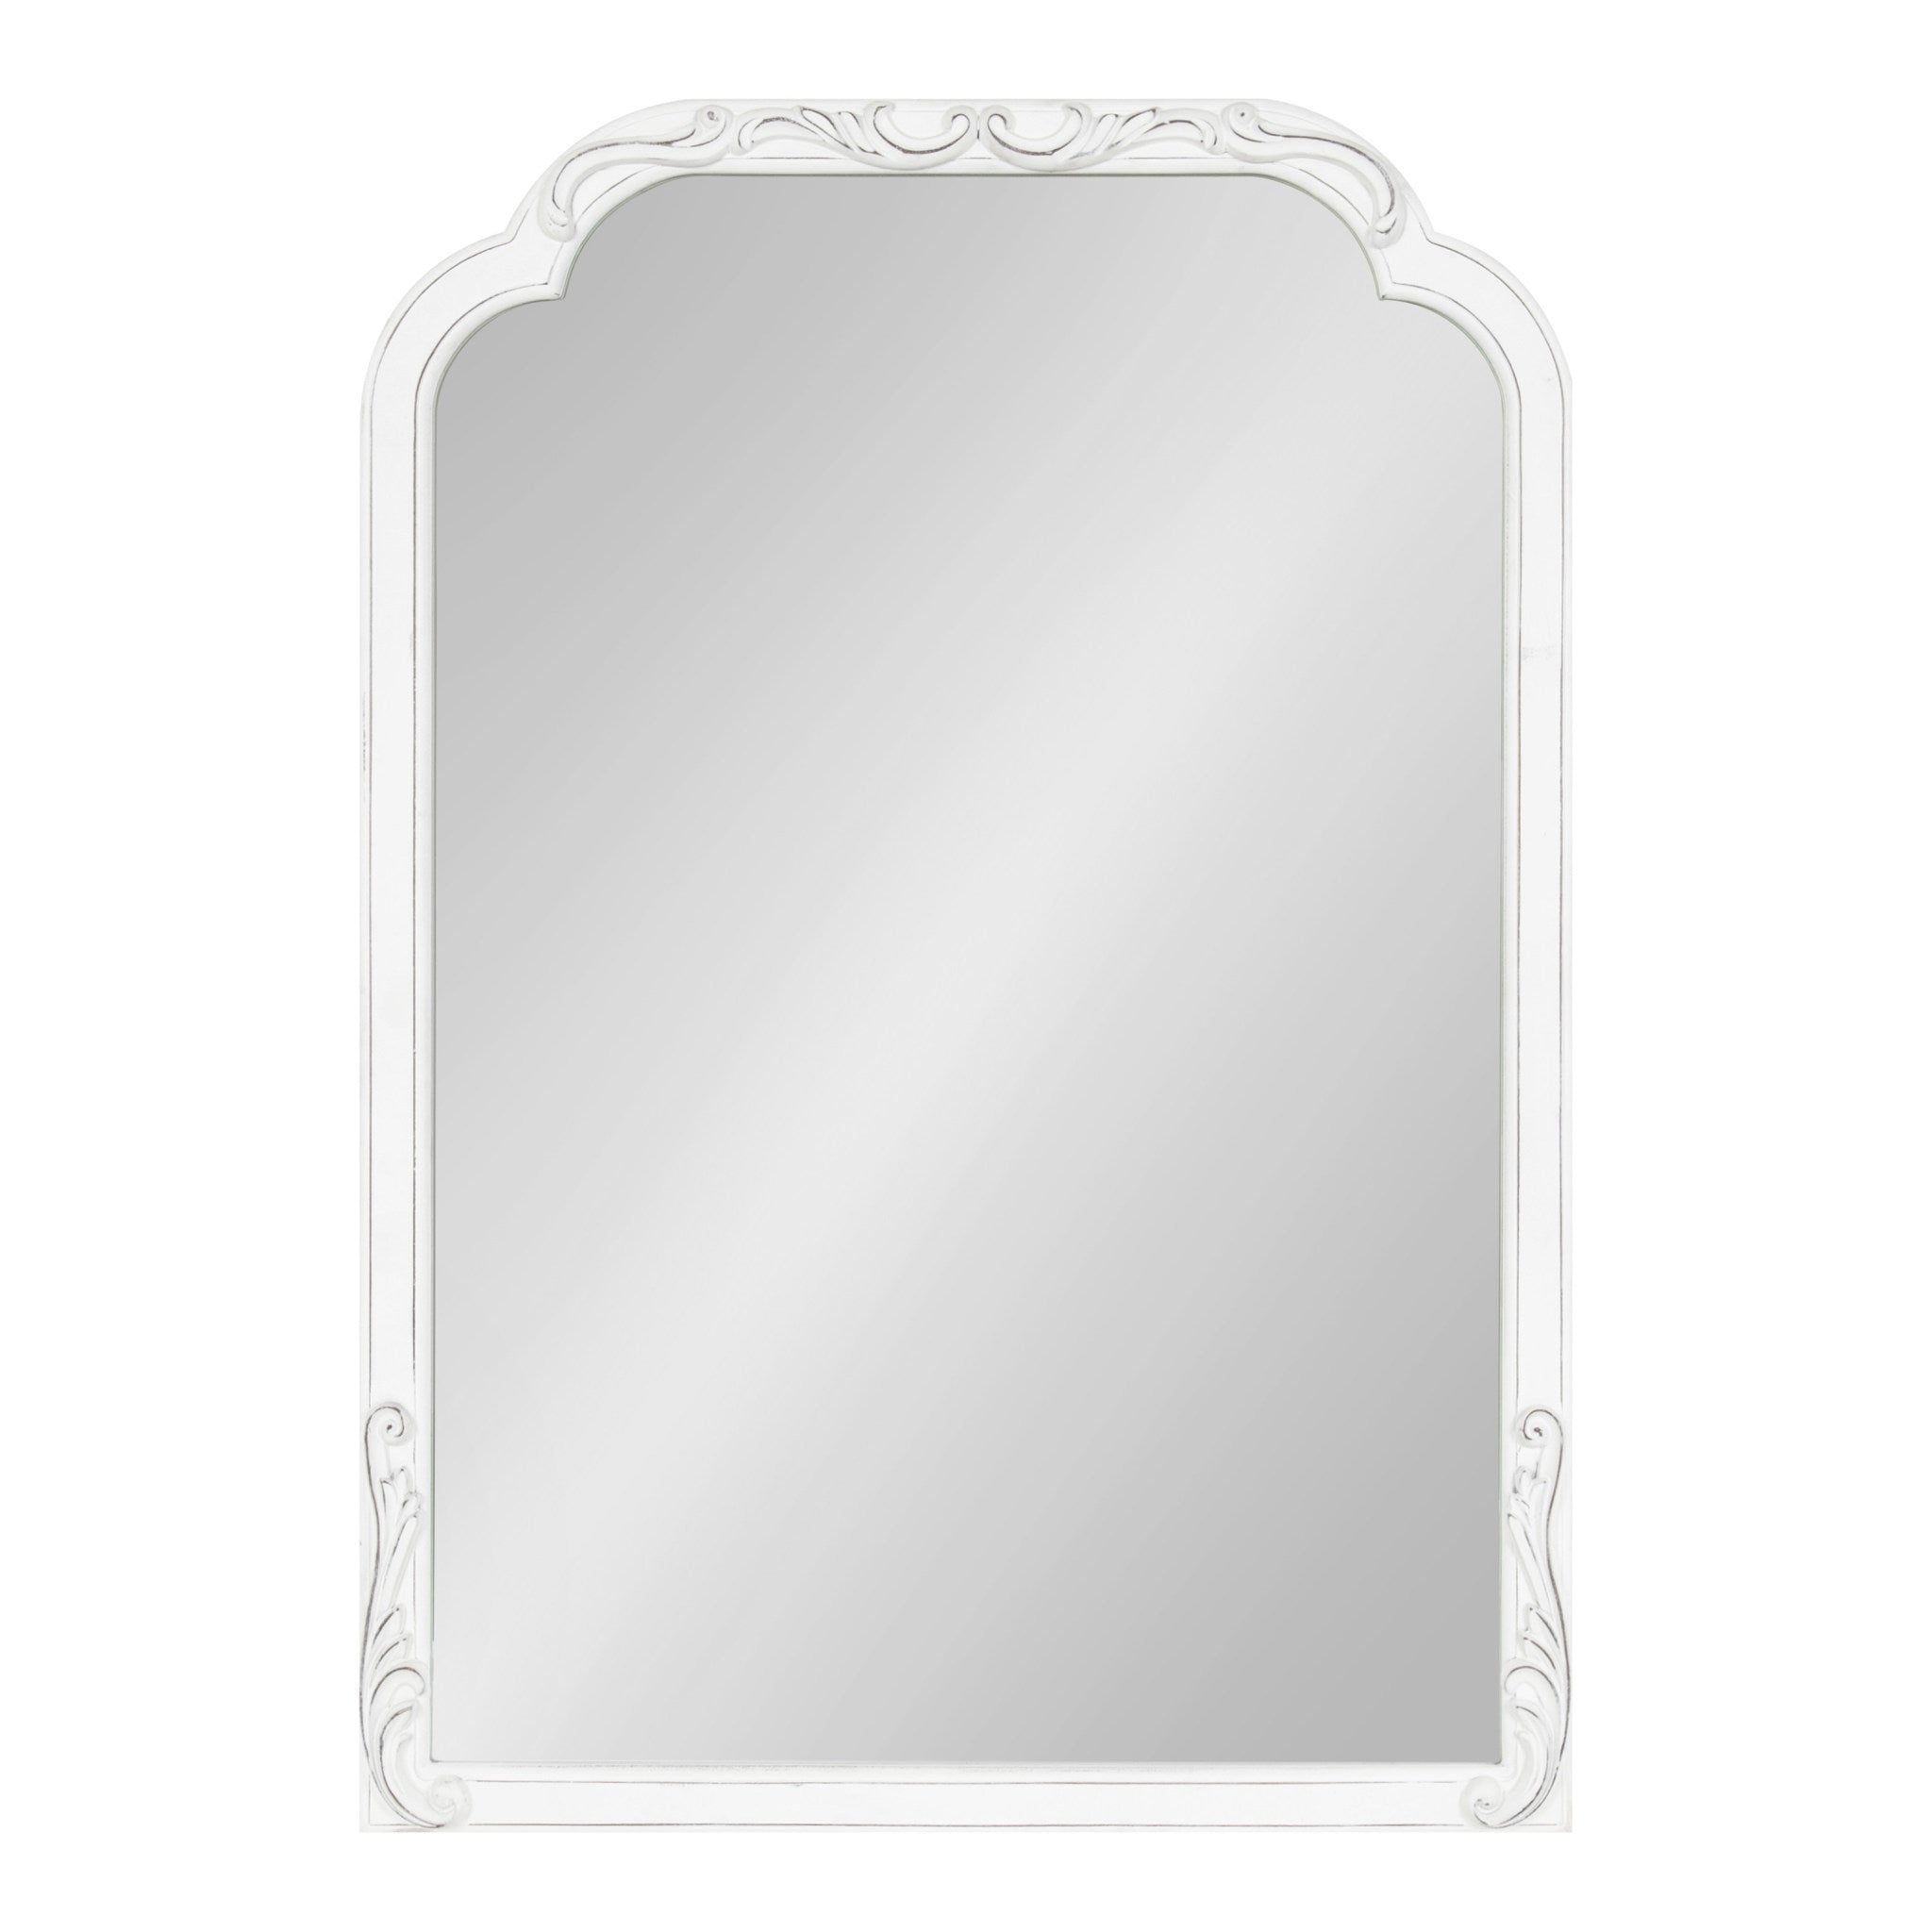 Fraimont Scallop Wall Mirror